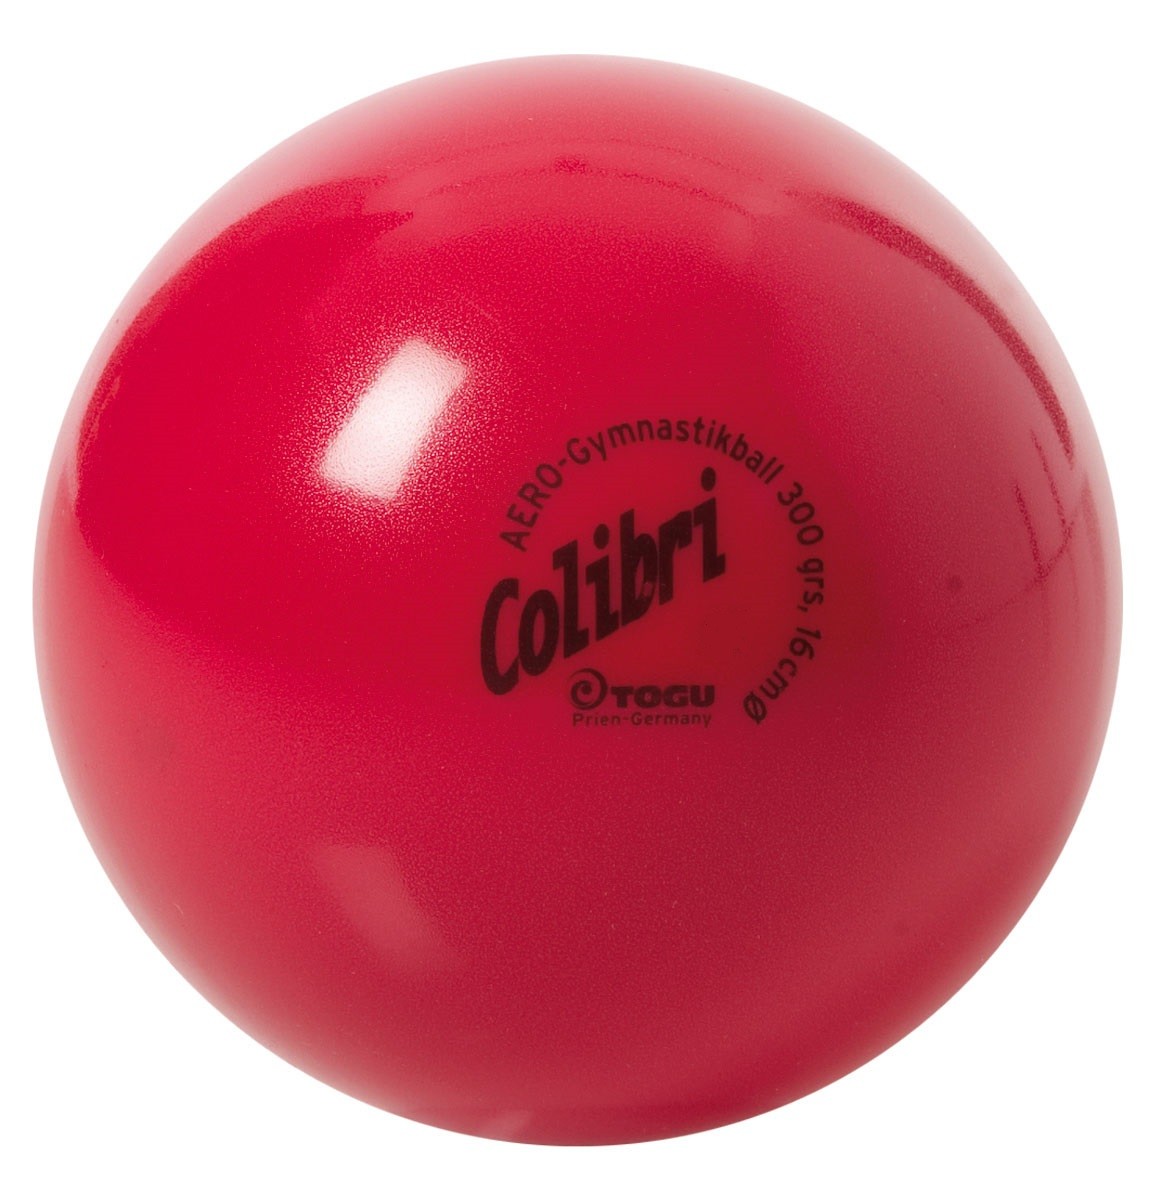 Colibri-Aero-Ball for Gymnastik